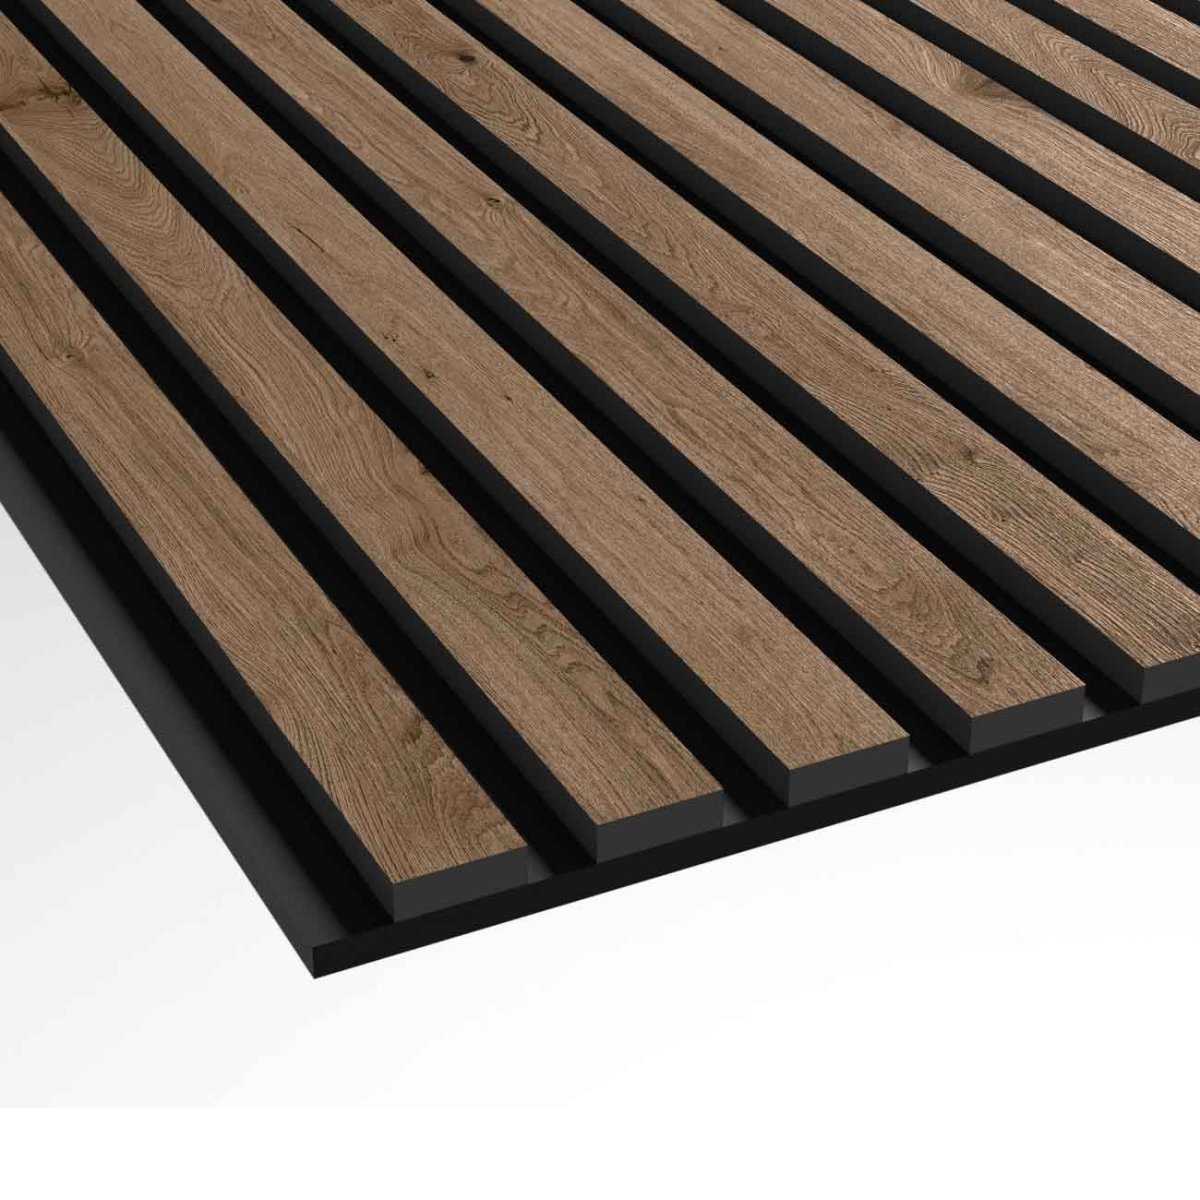 Acoustic Wood Wall Panels  Acoustic Wood Slatted Panels